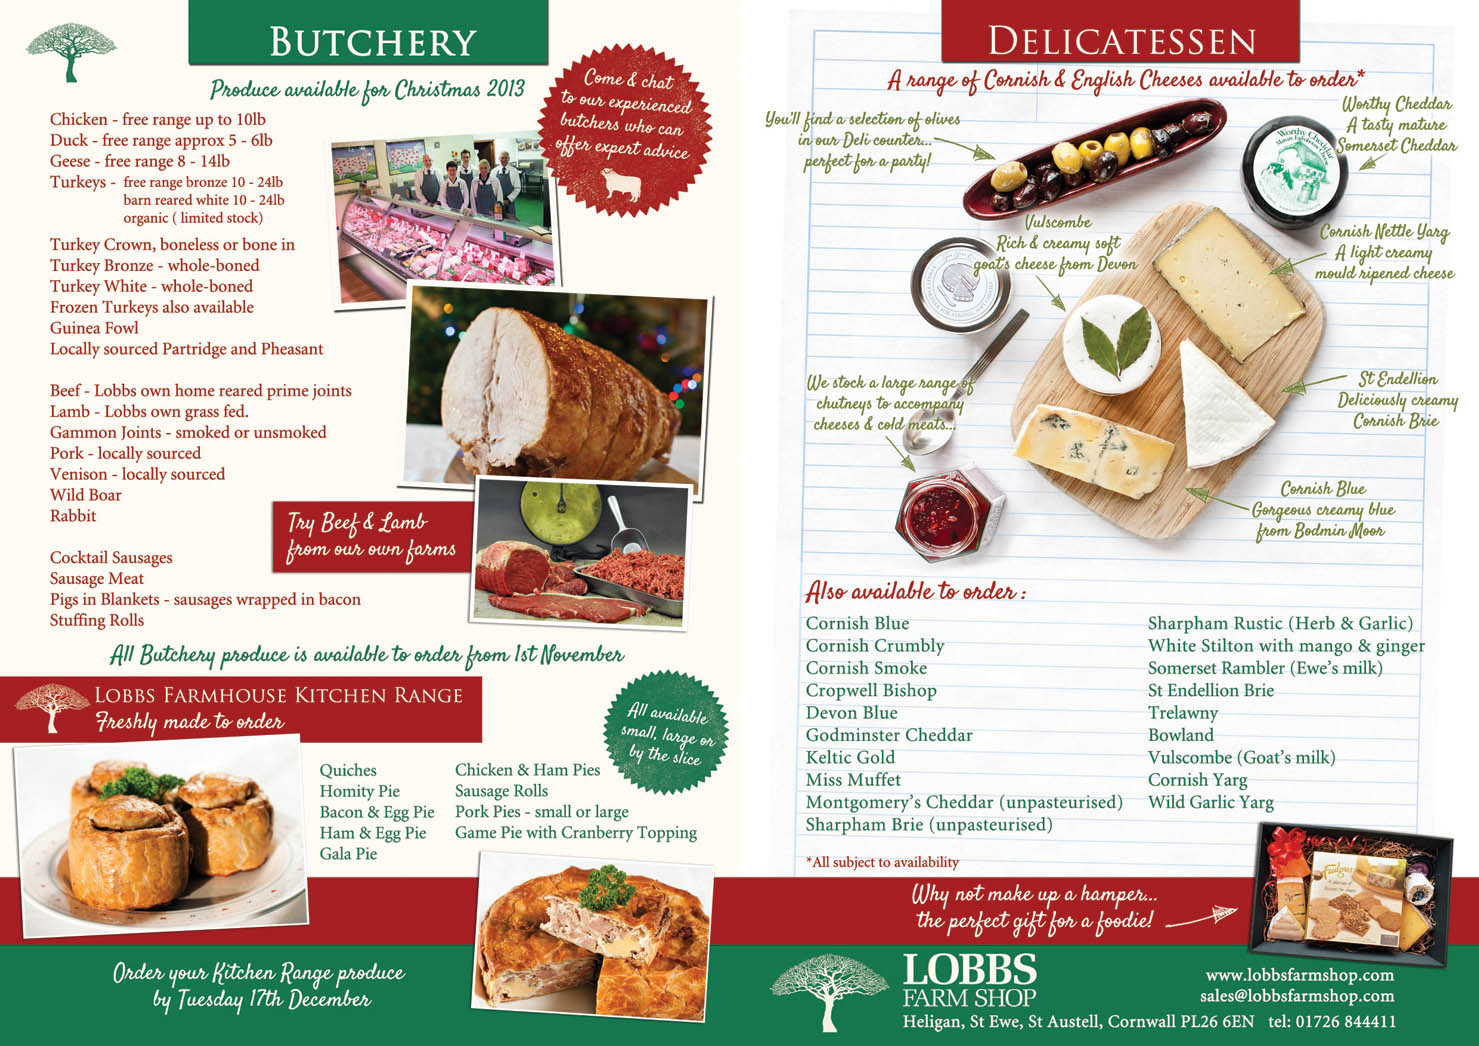 Brochure design and photography for Lobbs Farm Shop